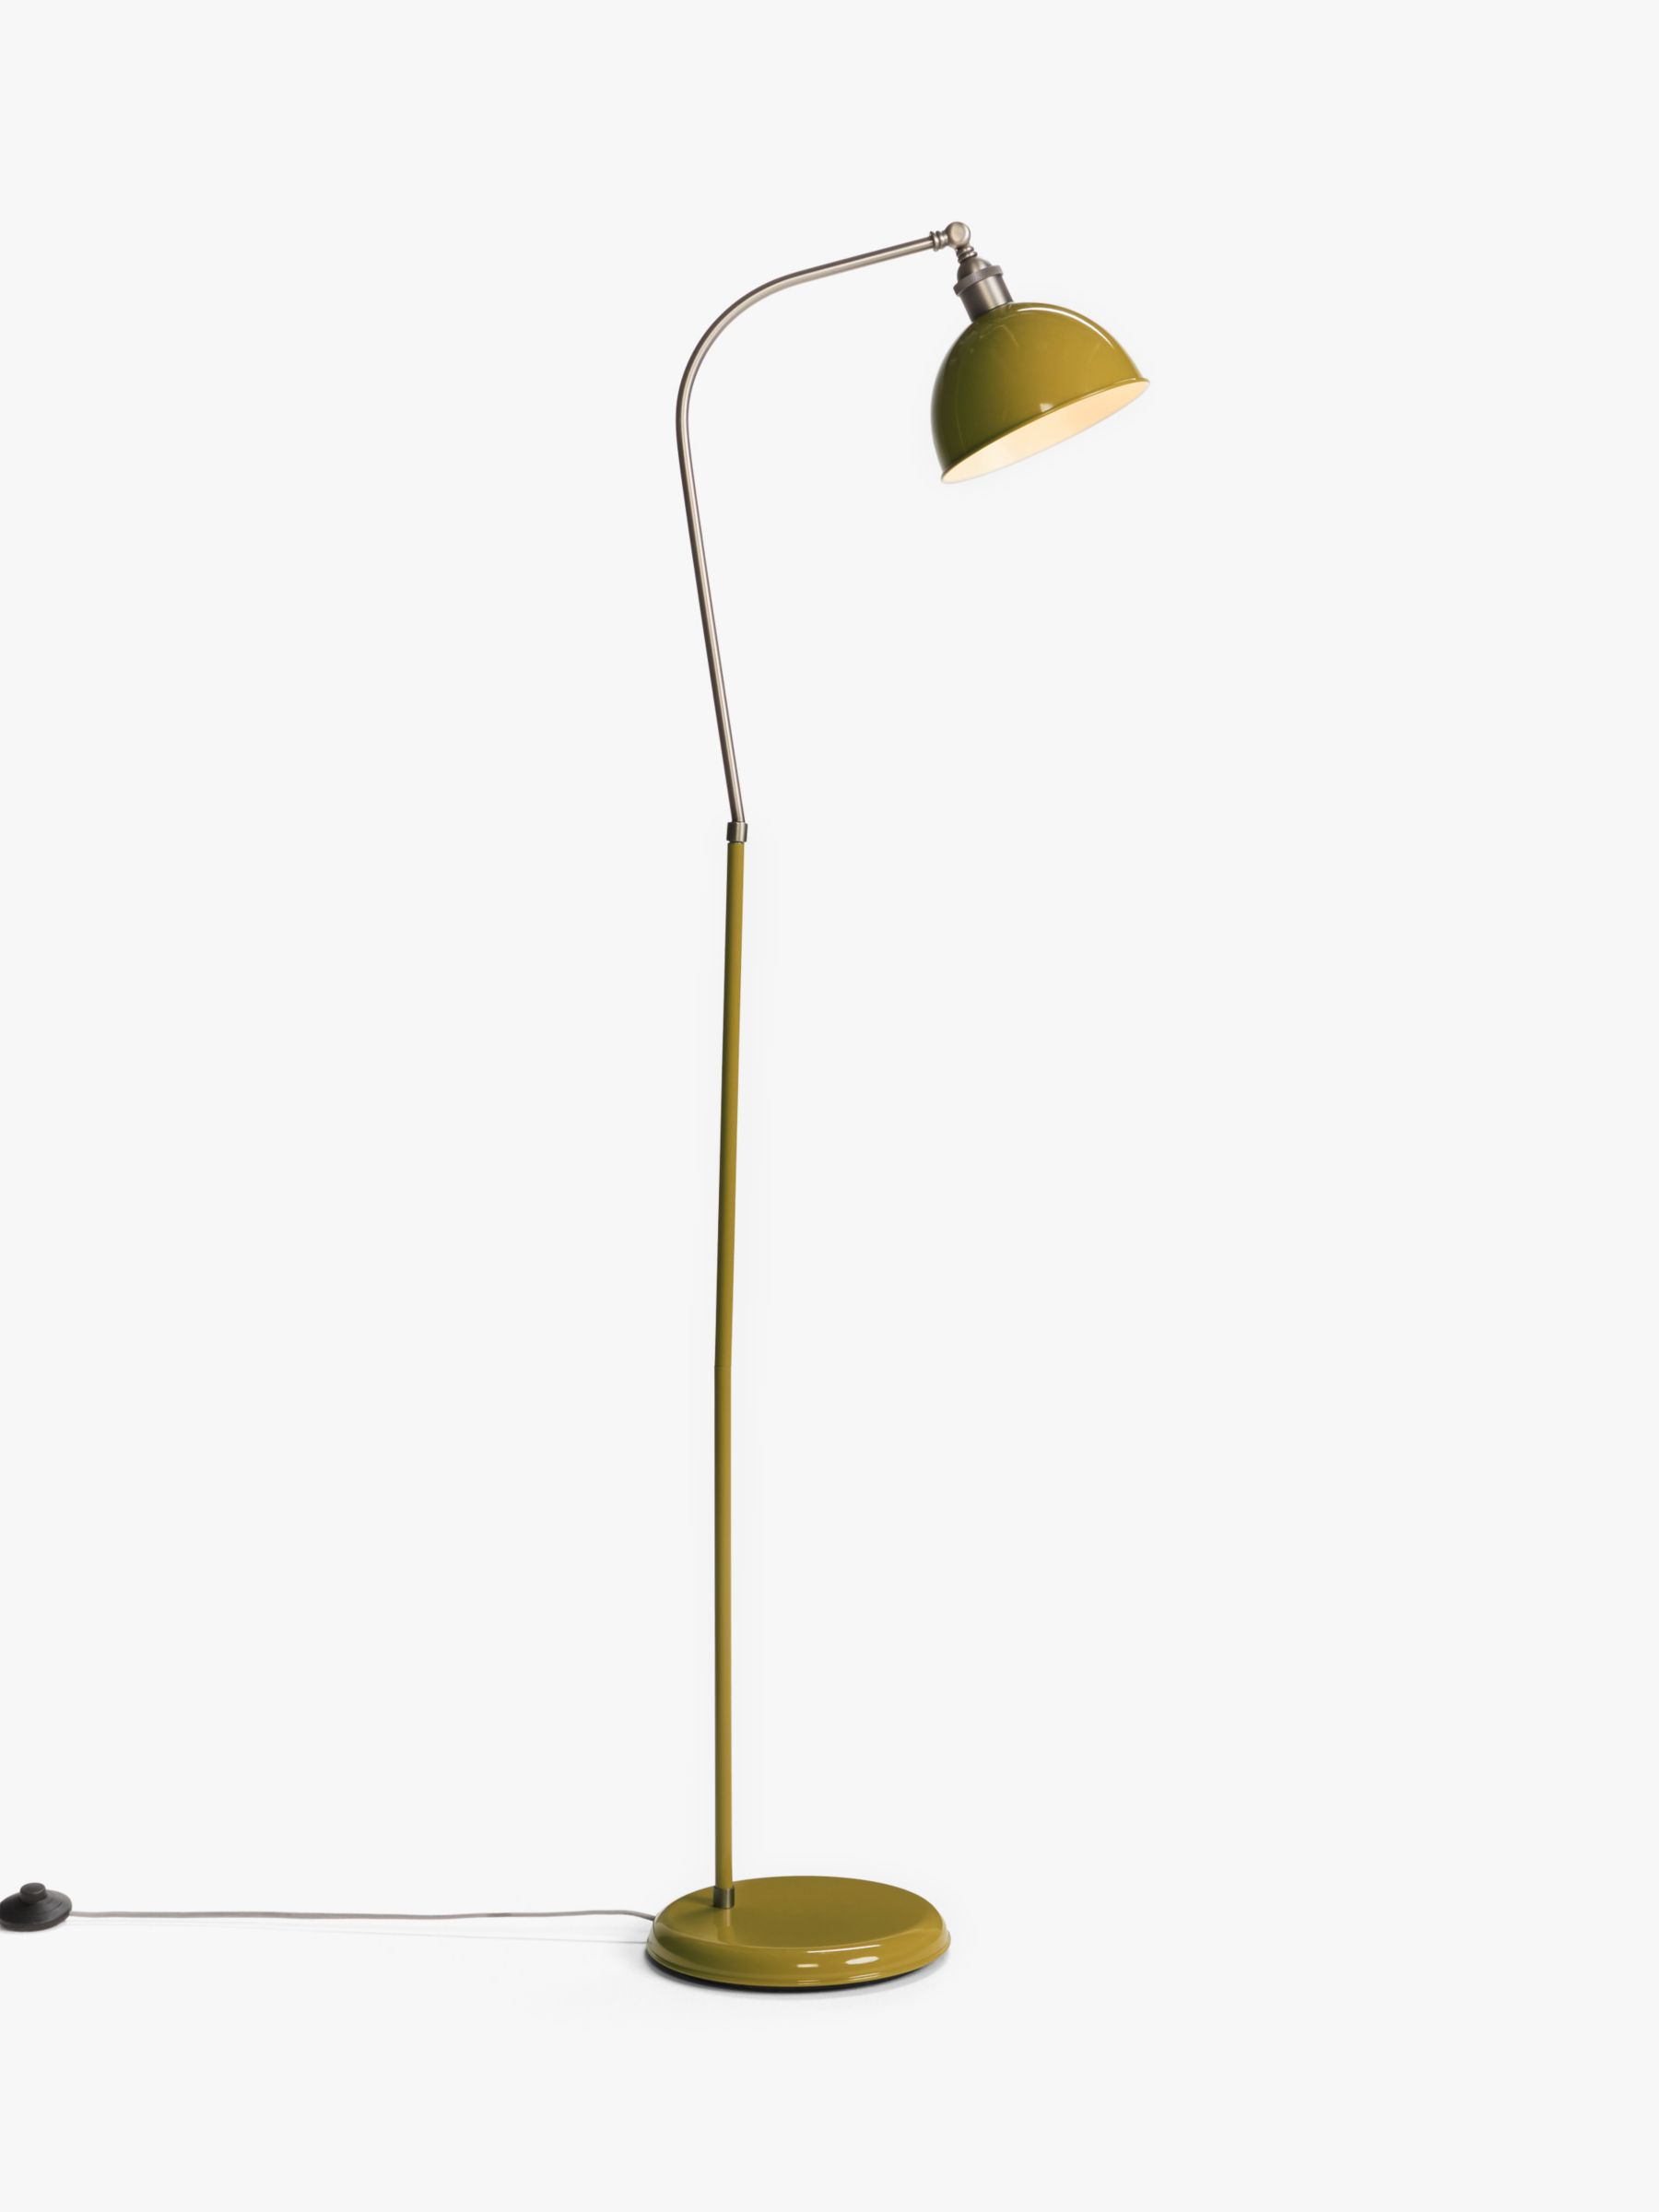 John Lewis & Partners Baldwin Floor Lamp, Gloss Olive